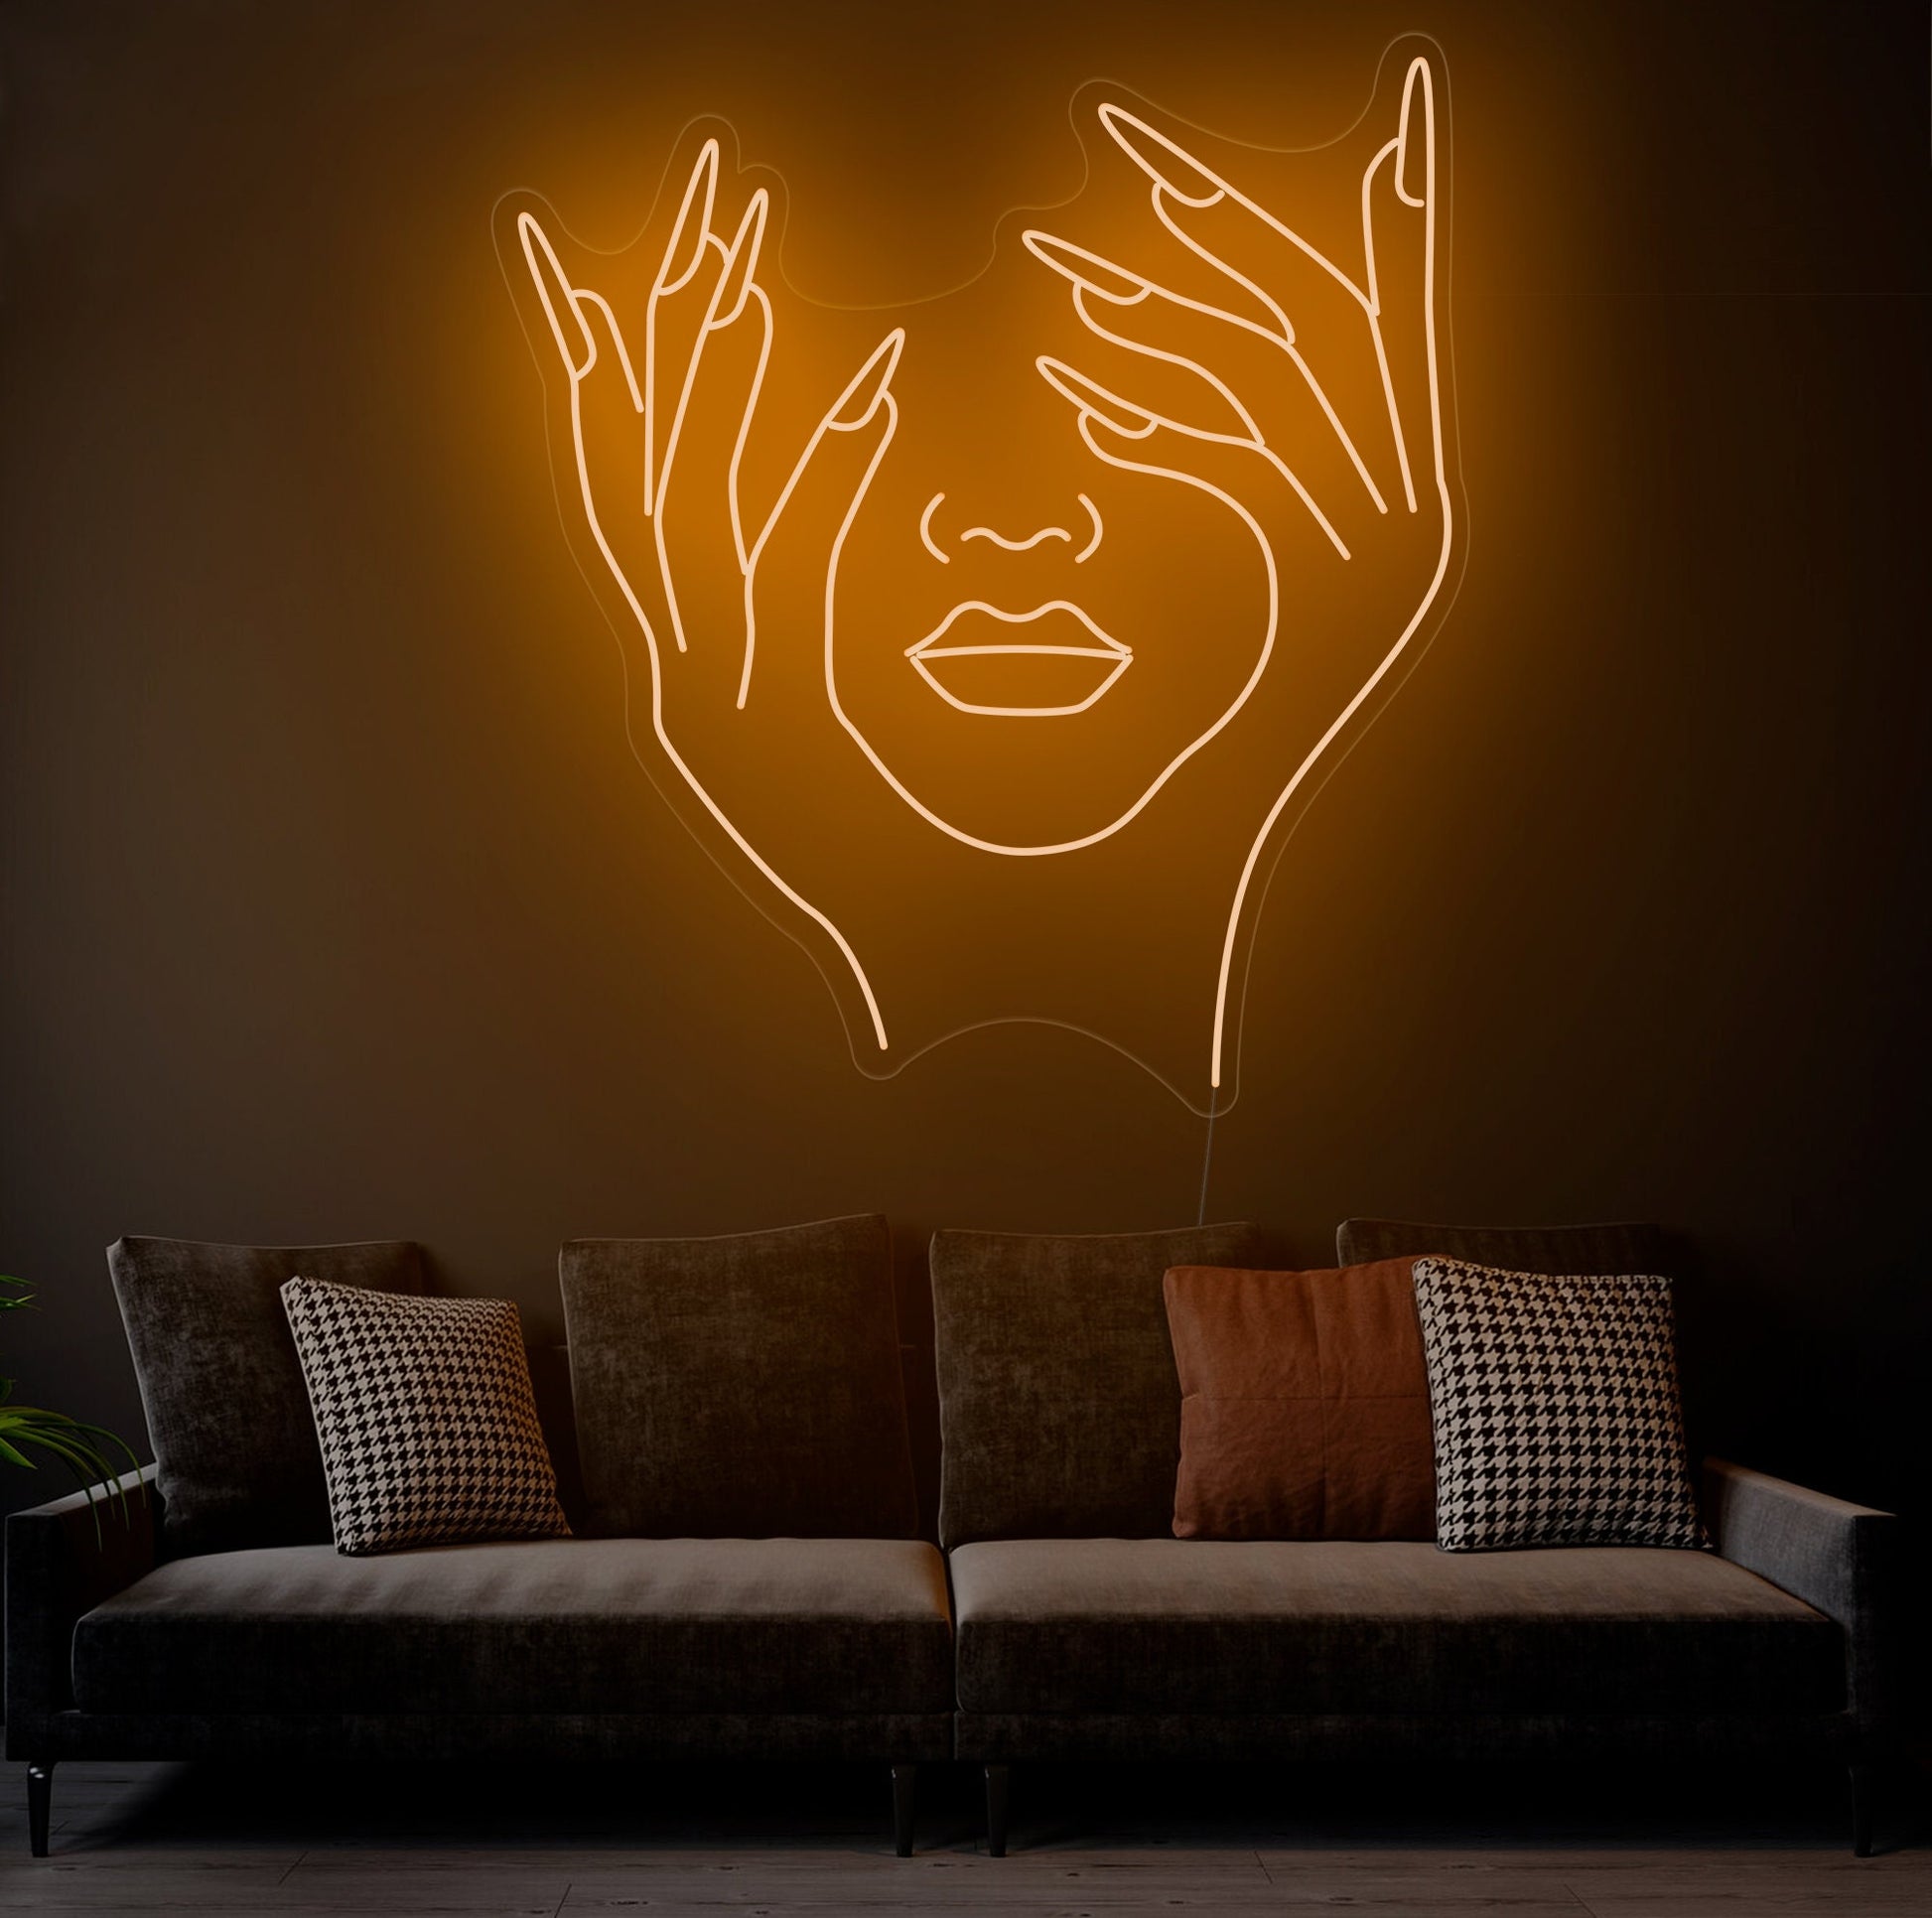 Hold Face - LED Neon Sign, Interior Decor, Room decor, Wall Decor, Custom Sign, Neon For Home